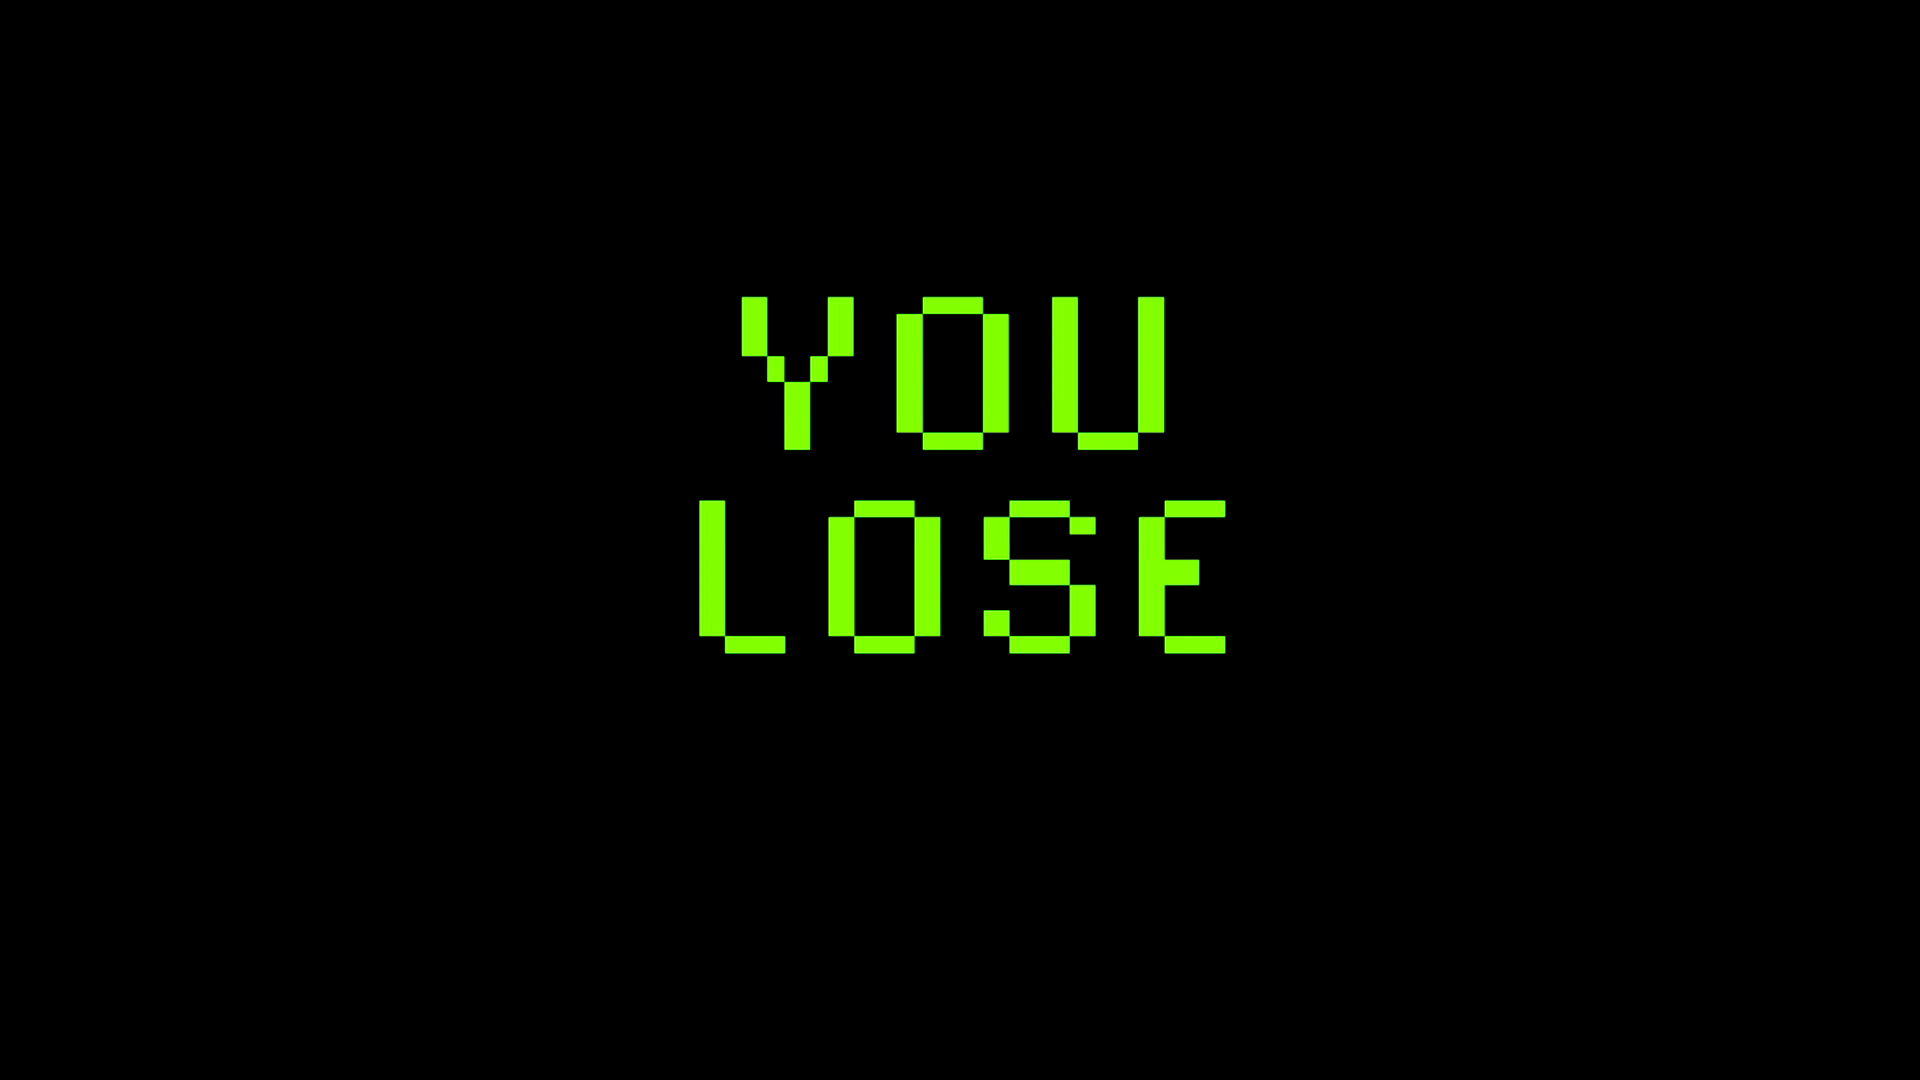 Win lose game. Надпись you lose. Картинка you lose. You Lost игра. Зеленая надпись на черном фоне.